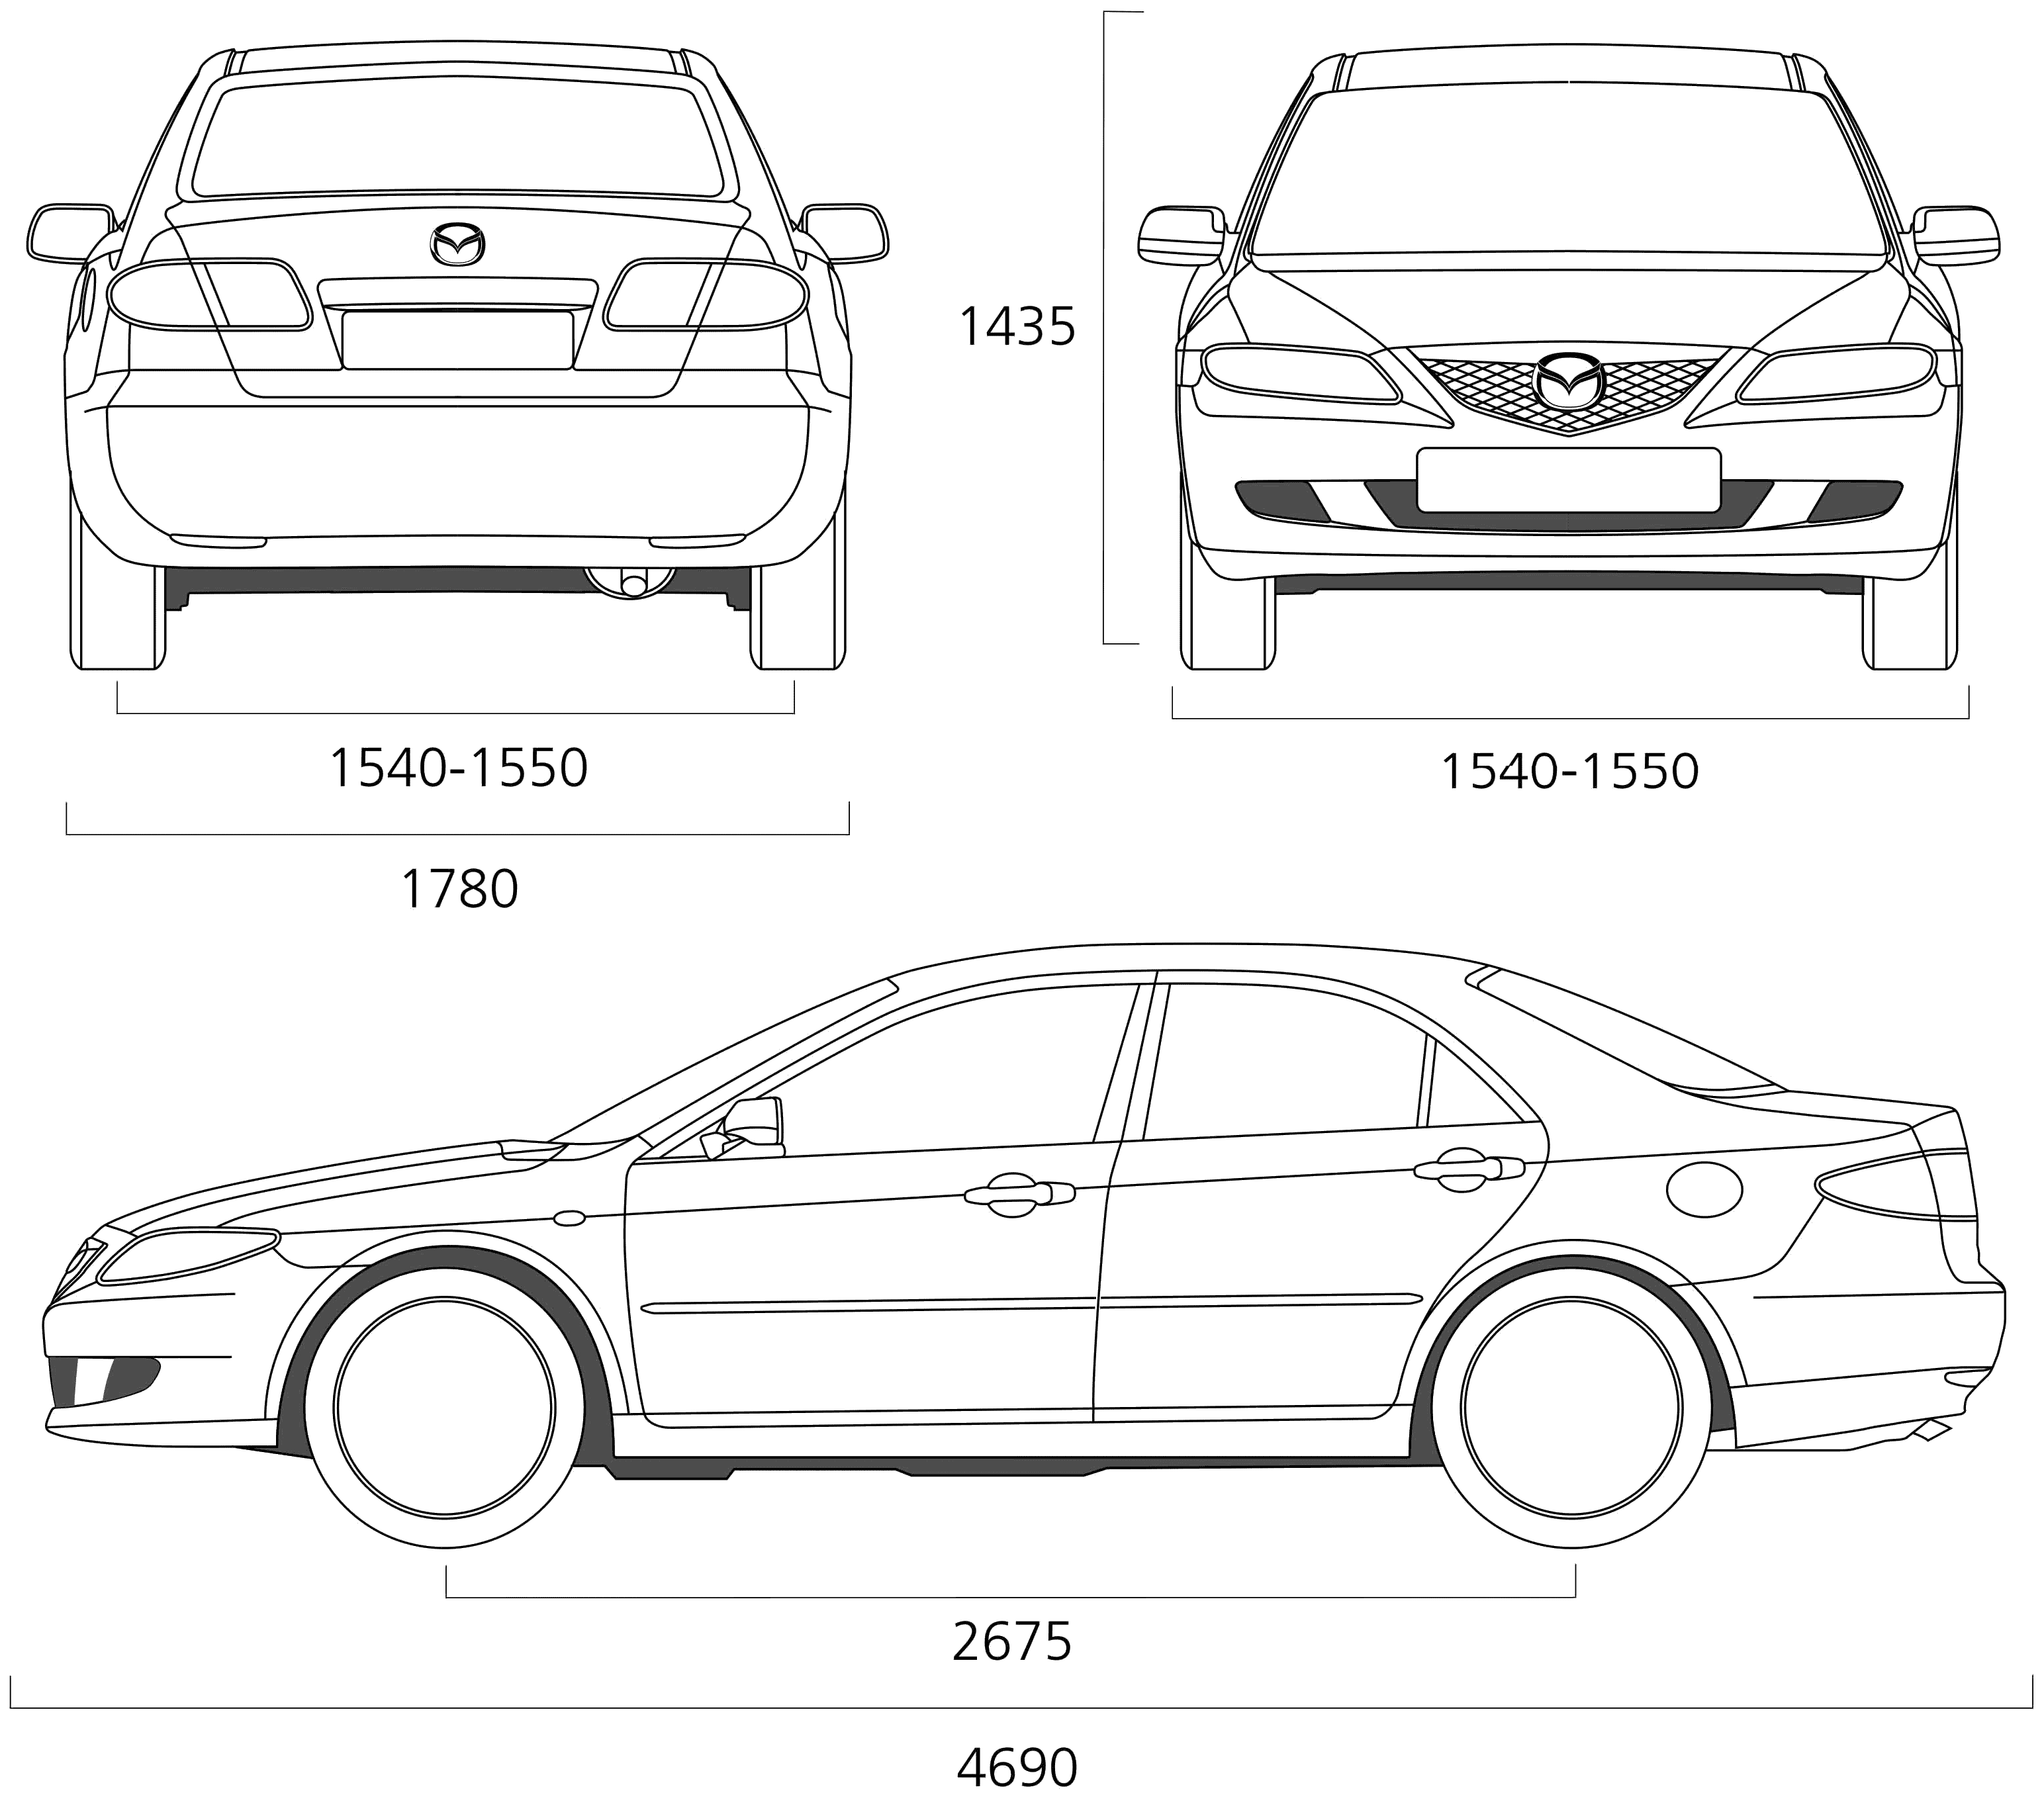 2007 Mazda 6 Sedan V2 Blueprints Free - Outlines